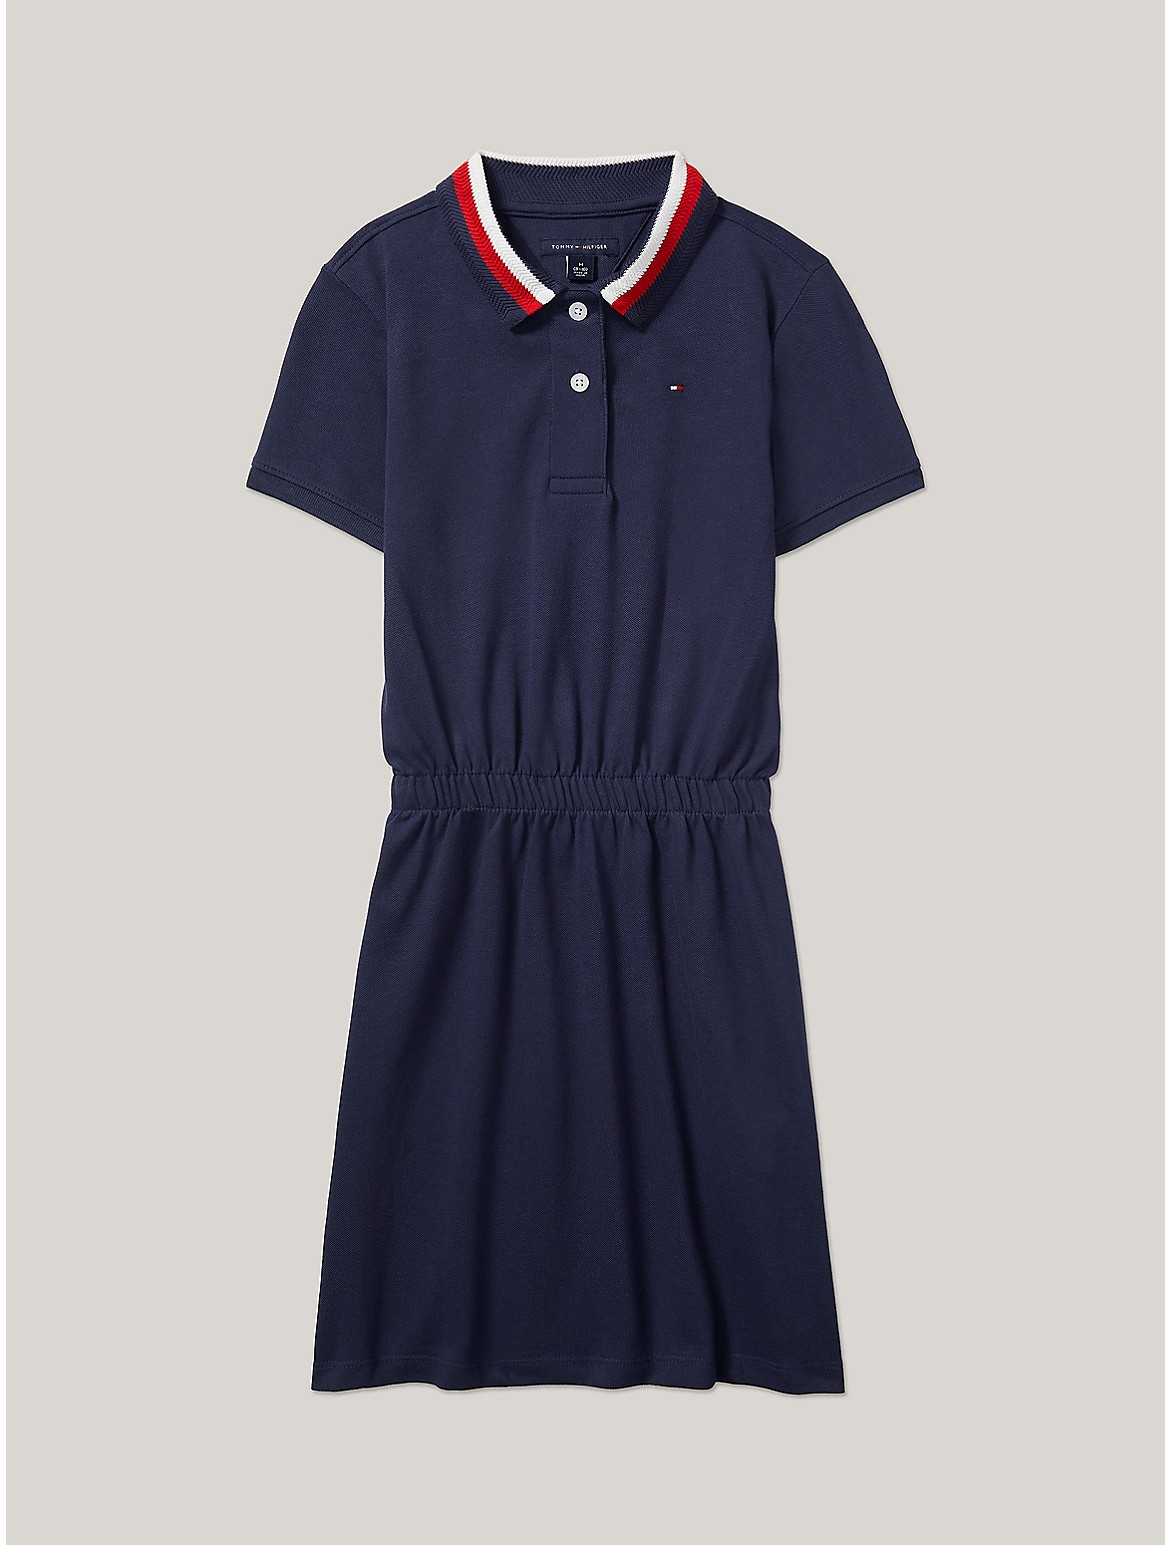 Tommy Hilfiger Girls' Kids' Classic Polo Dress